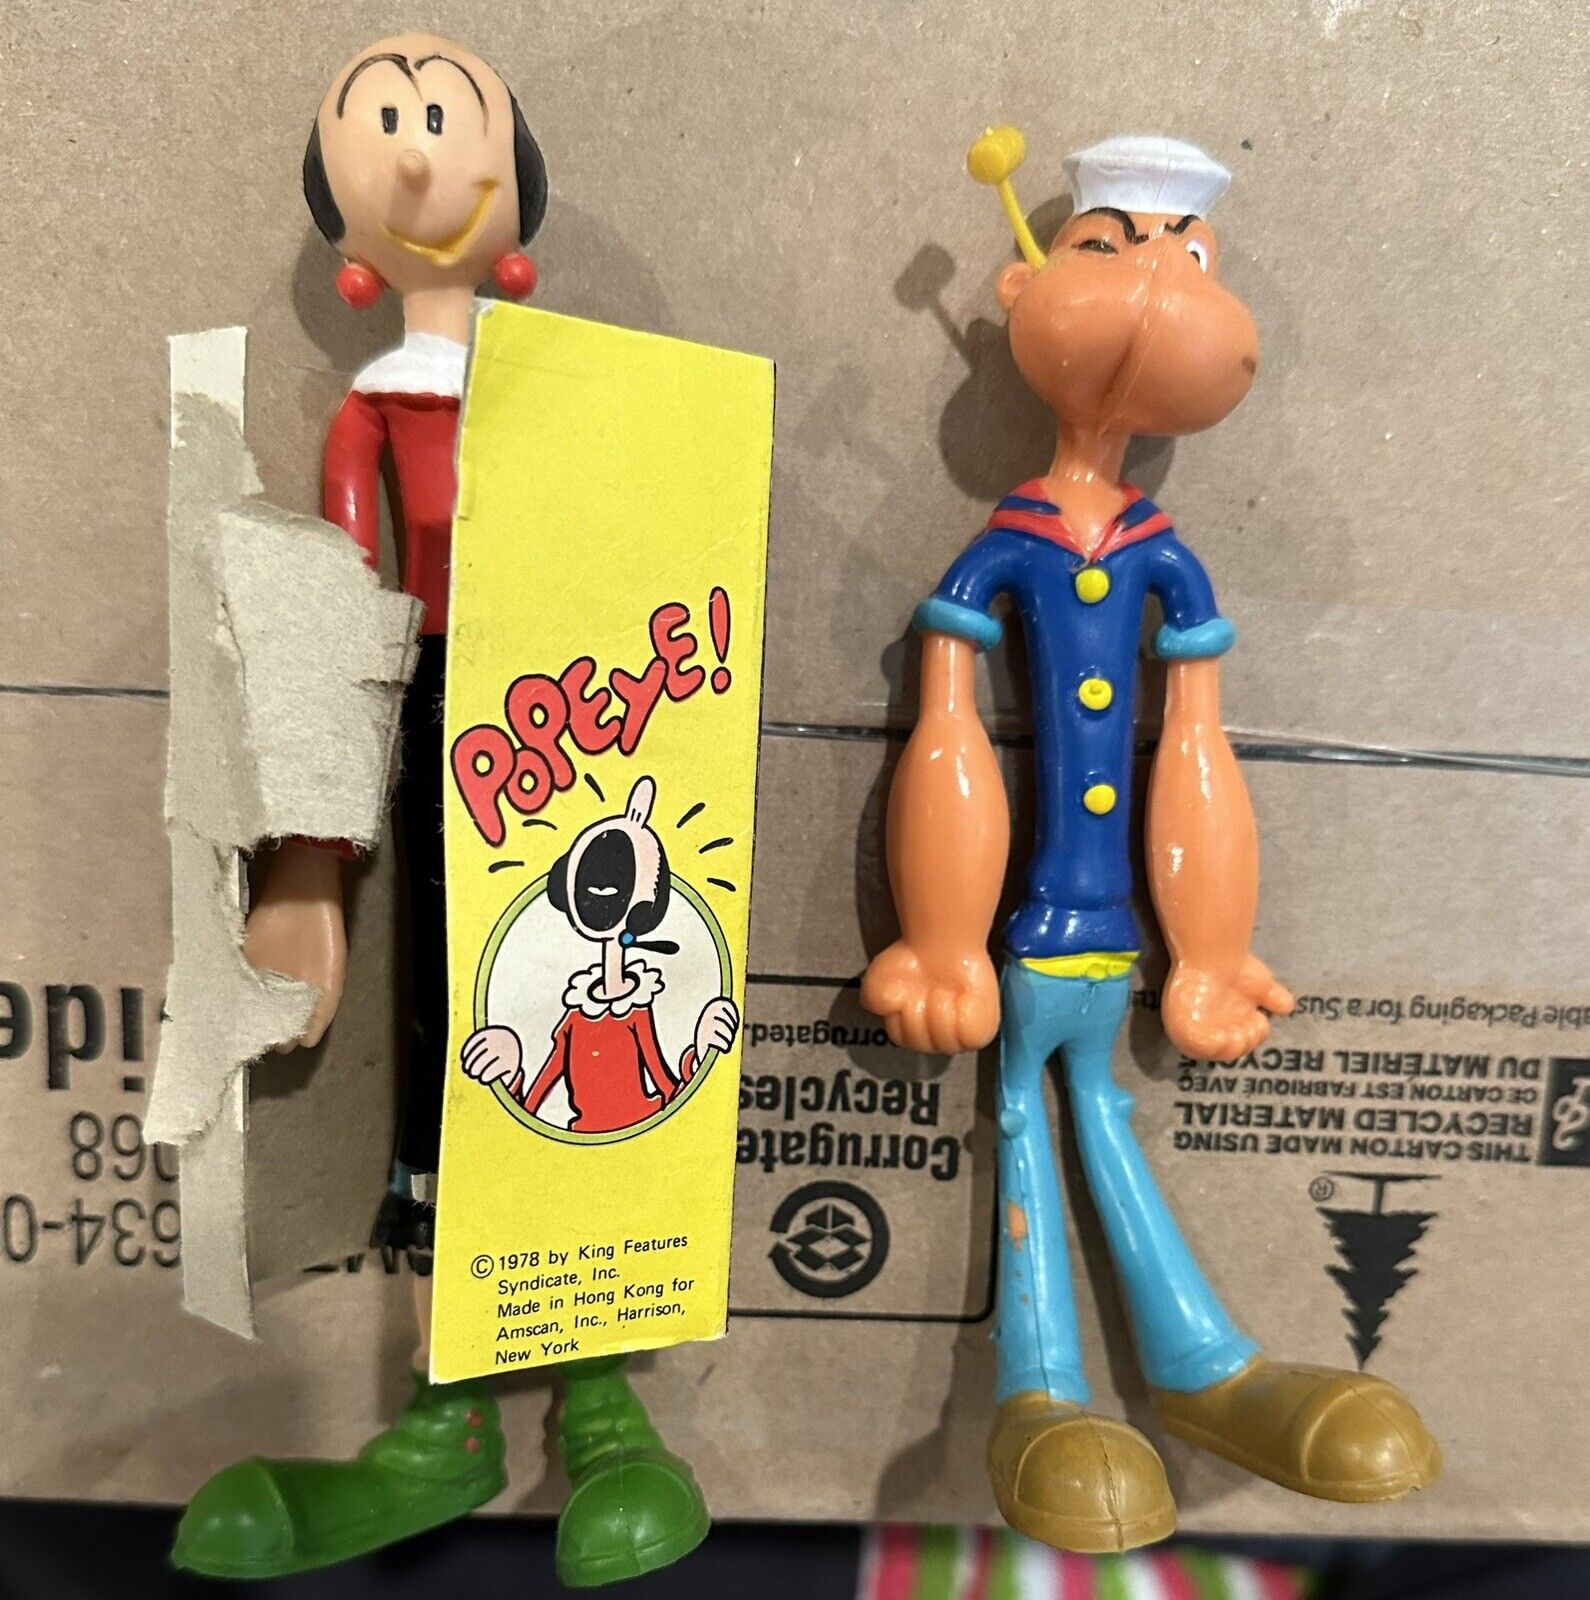 Popeye & Olive 1978 vintage figurines